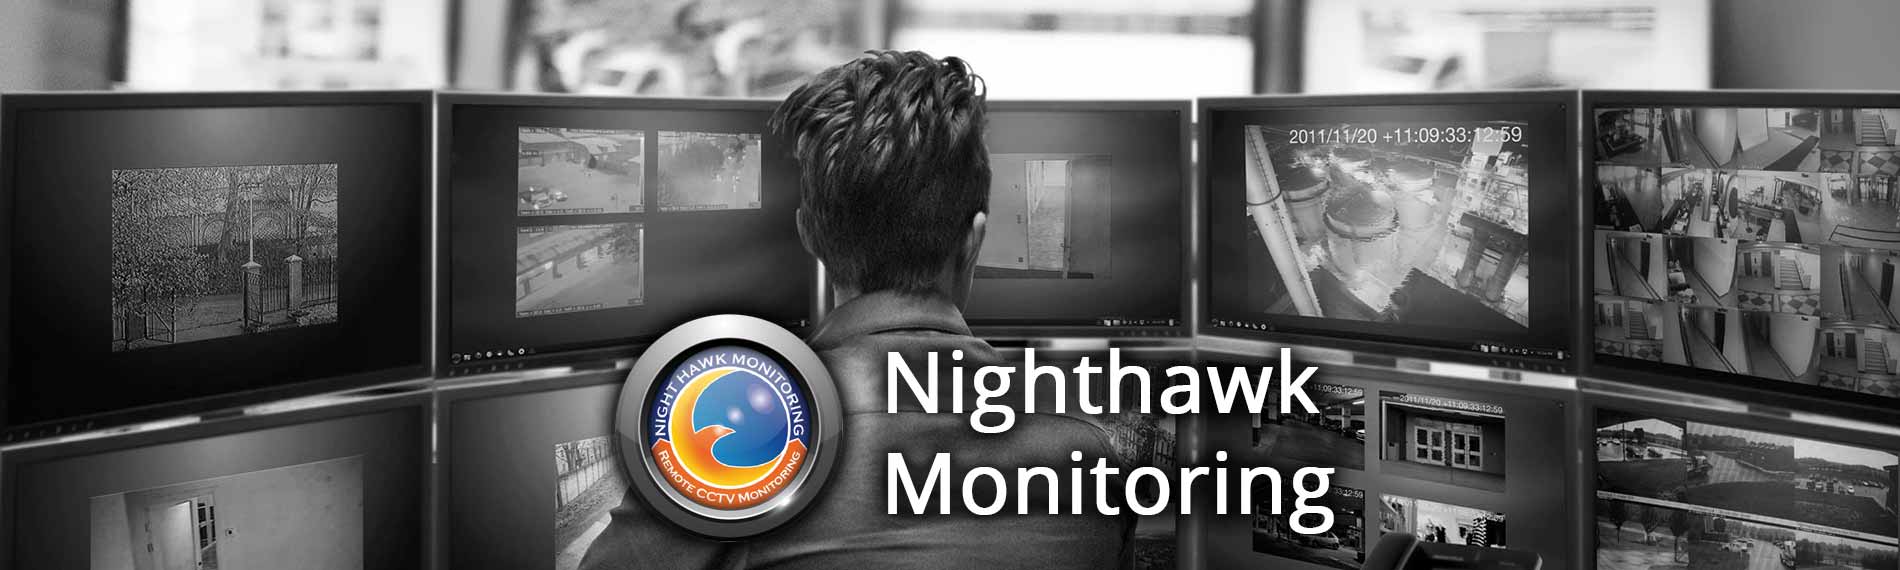 Remote Video Surveillance Salt Lake City UT - Salt Lake City Remote Video Surveillance Monitoring - Live Security Cameras Monitoring Salt Lake City - Utah